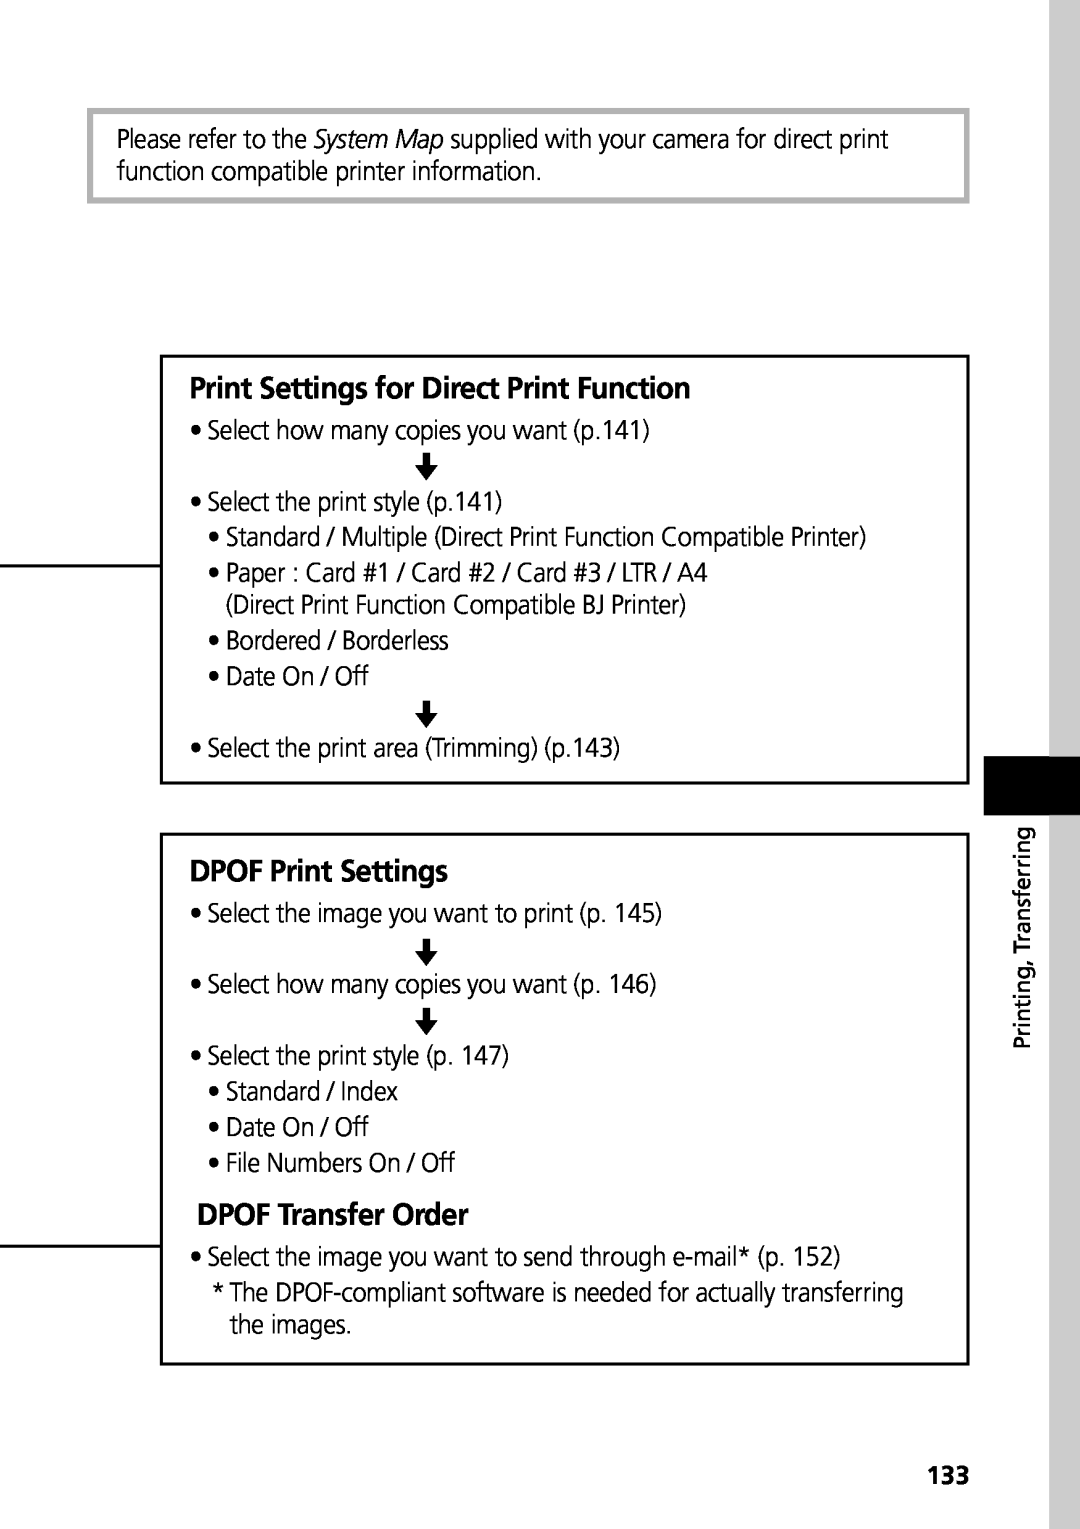 Canon G3 manual Print Settings for Direct Print Function, DPOF Print Settings, DPOF Transfer Order 